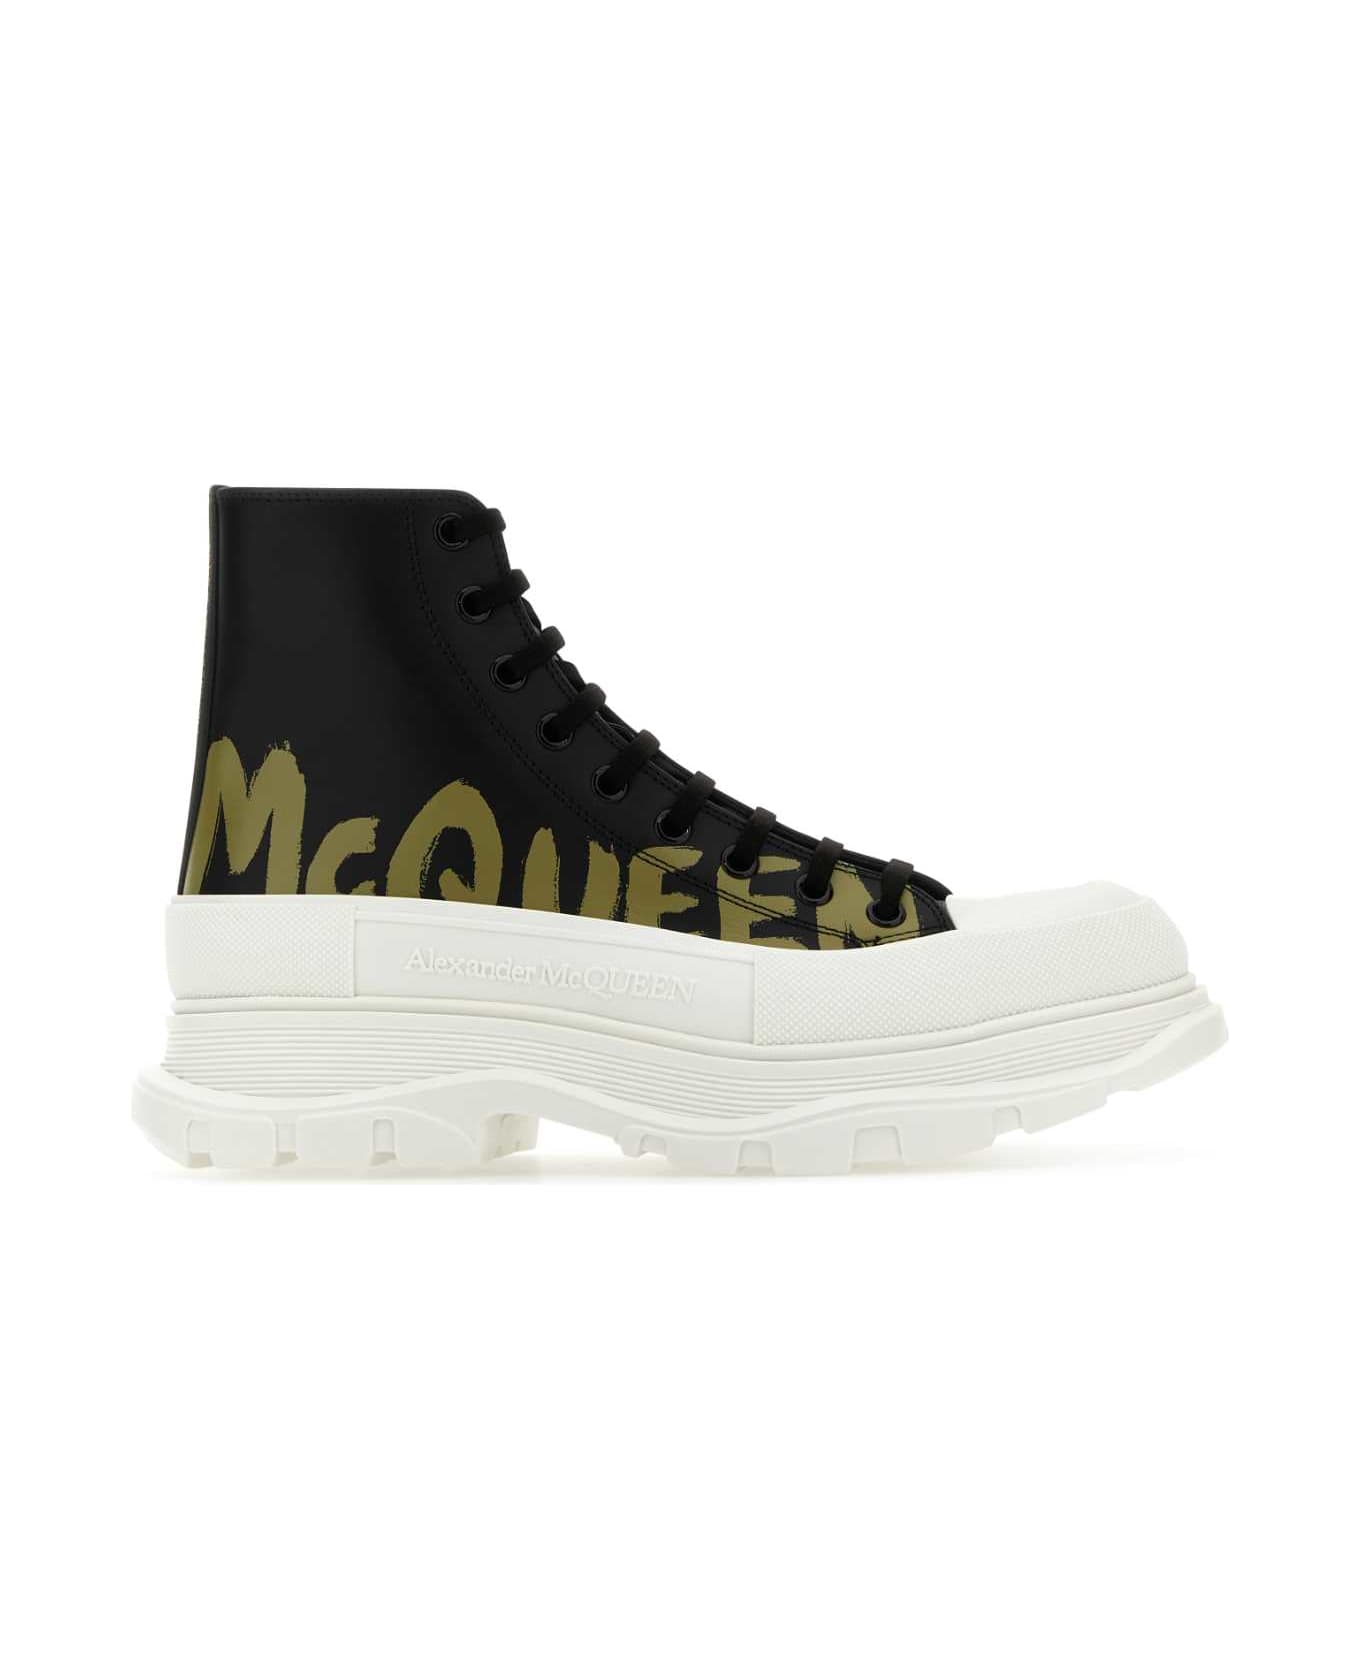 Alexander McQueen Black Leather Tread Slick Sneakers - BLKOFWHPALEKHAKI スニーカー